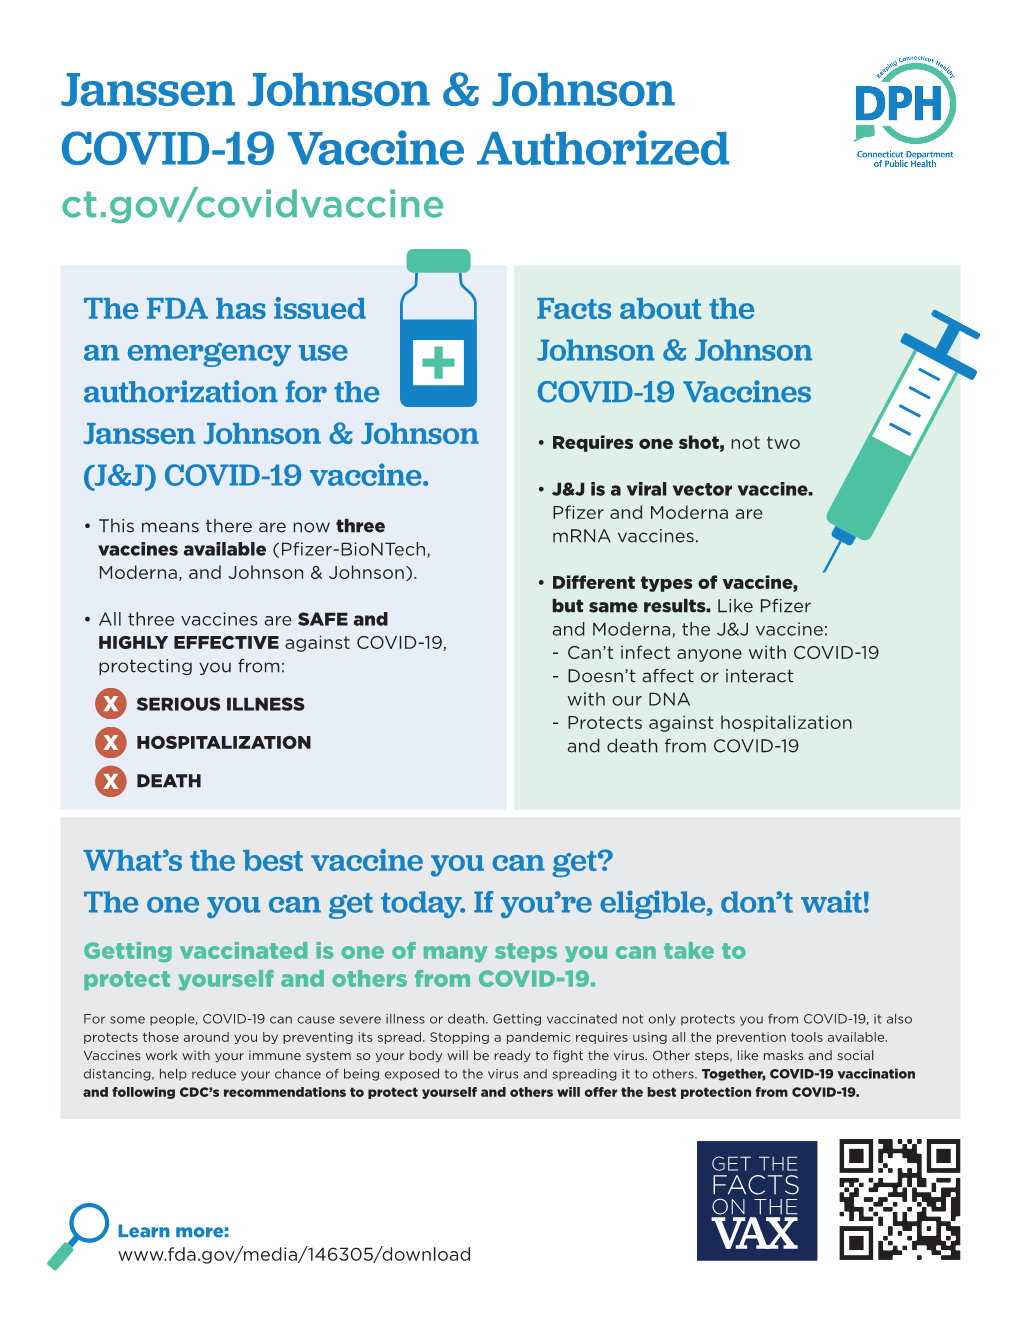 Janssen Johnson & Johnson COVID-19 Vaccine Authorized